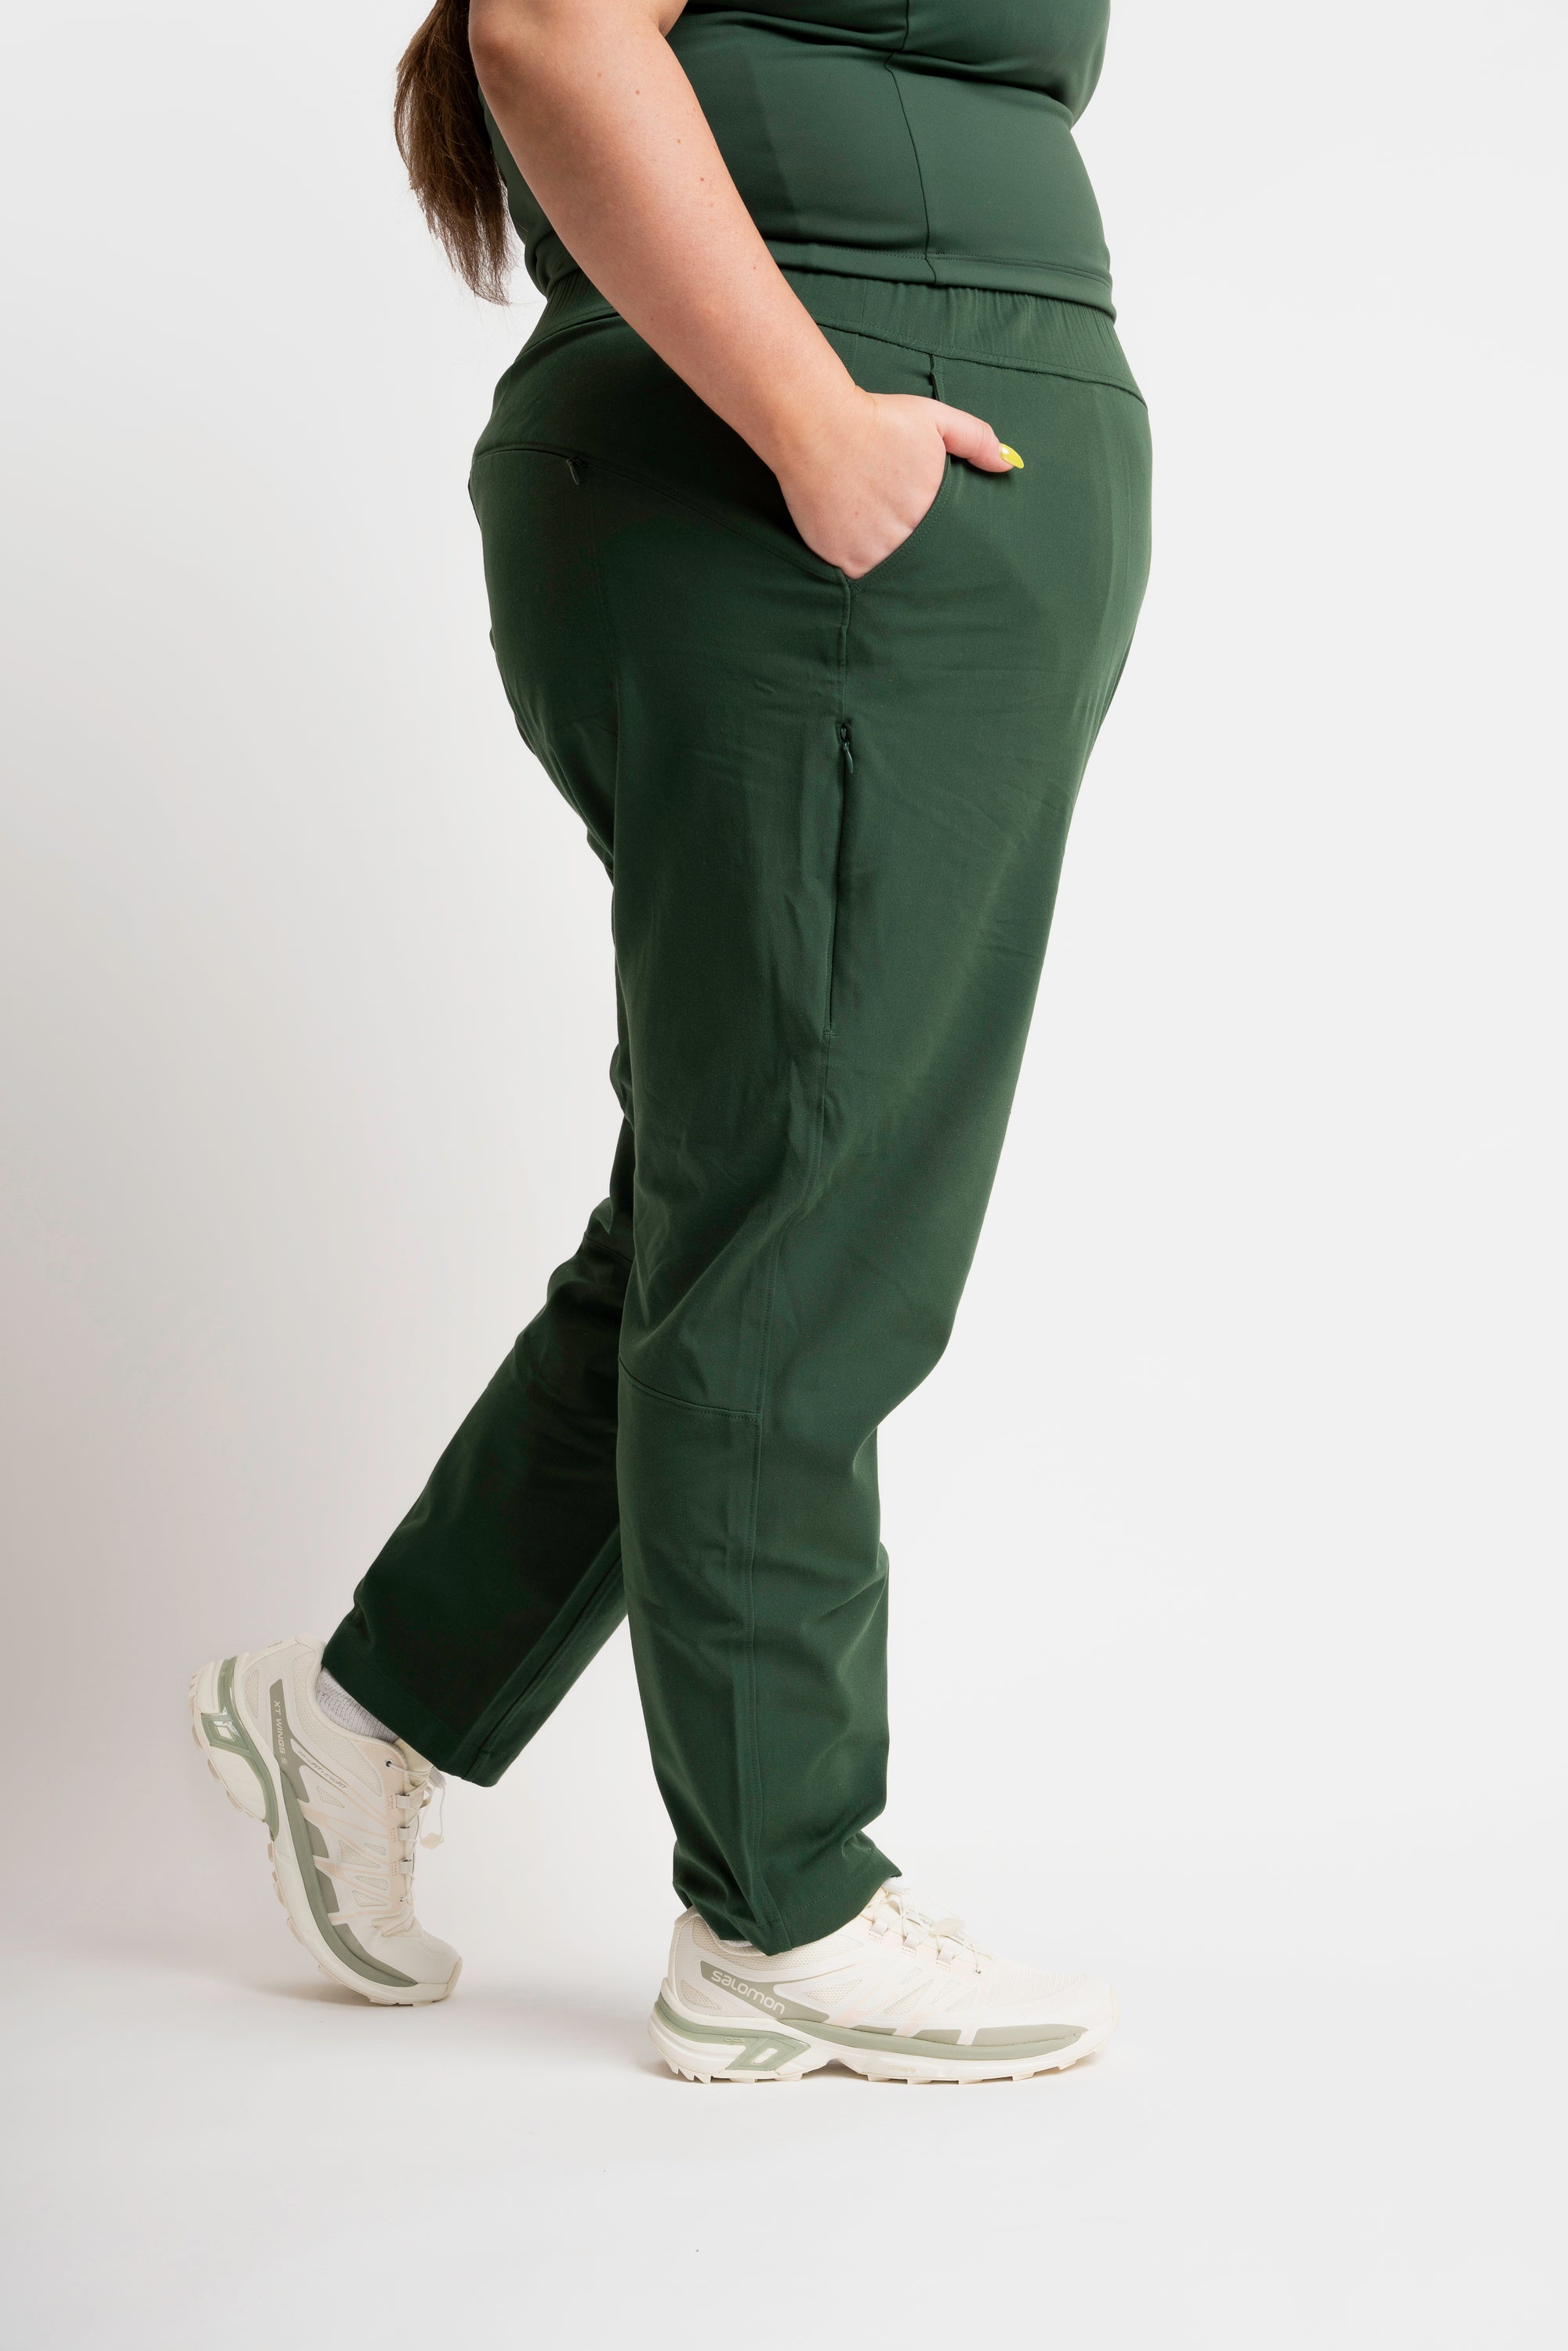 HDE Women's Plus Size Yoga Pants High Waisted Wide Leg Leggings Dark Green  3X